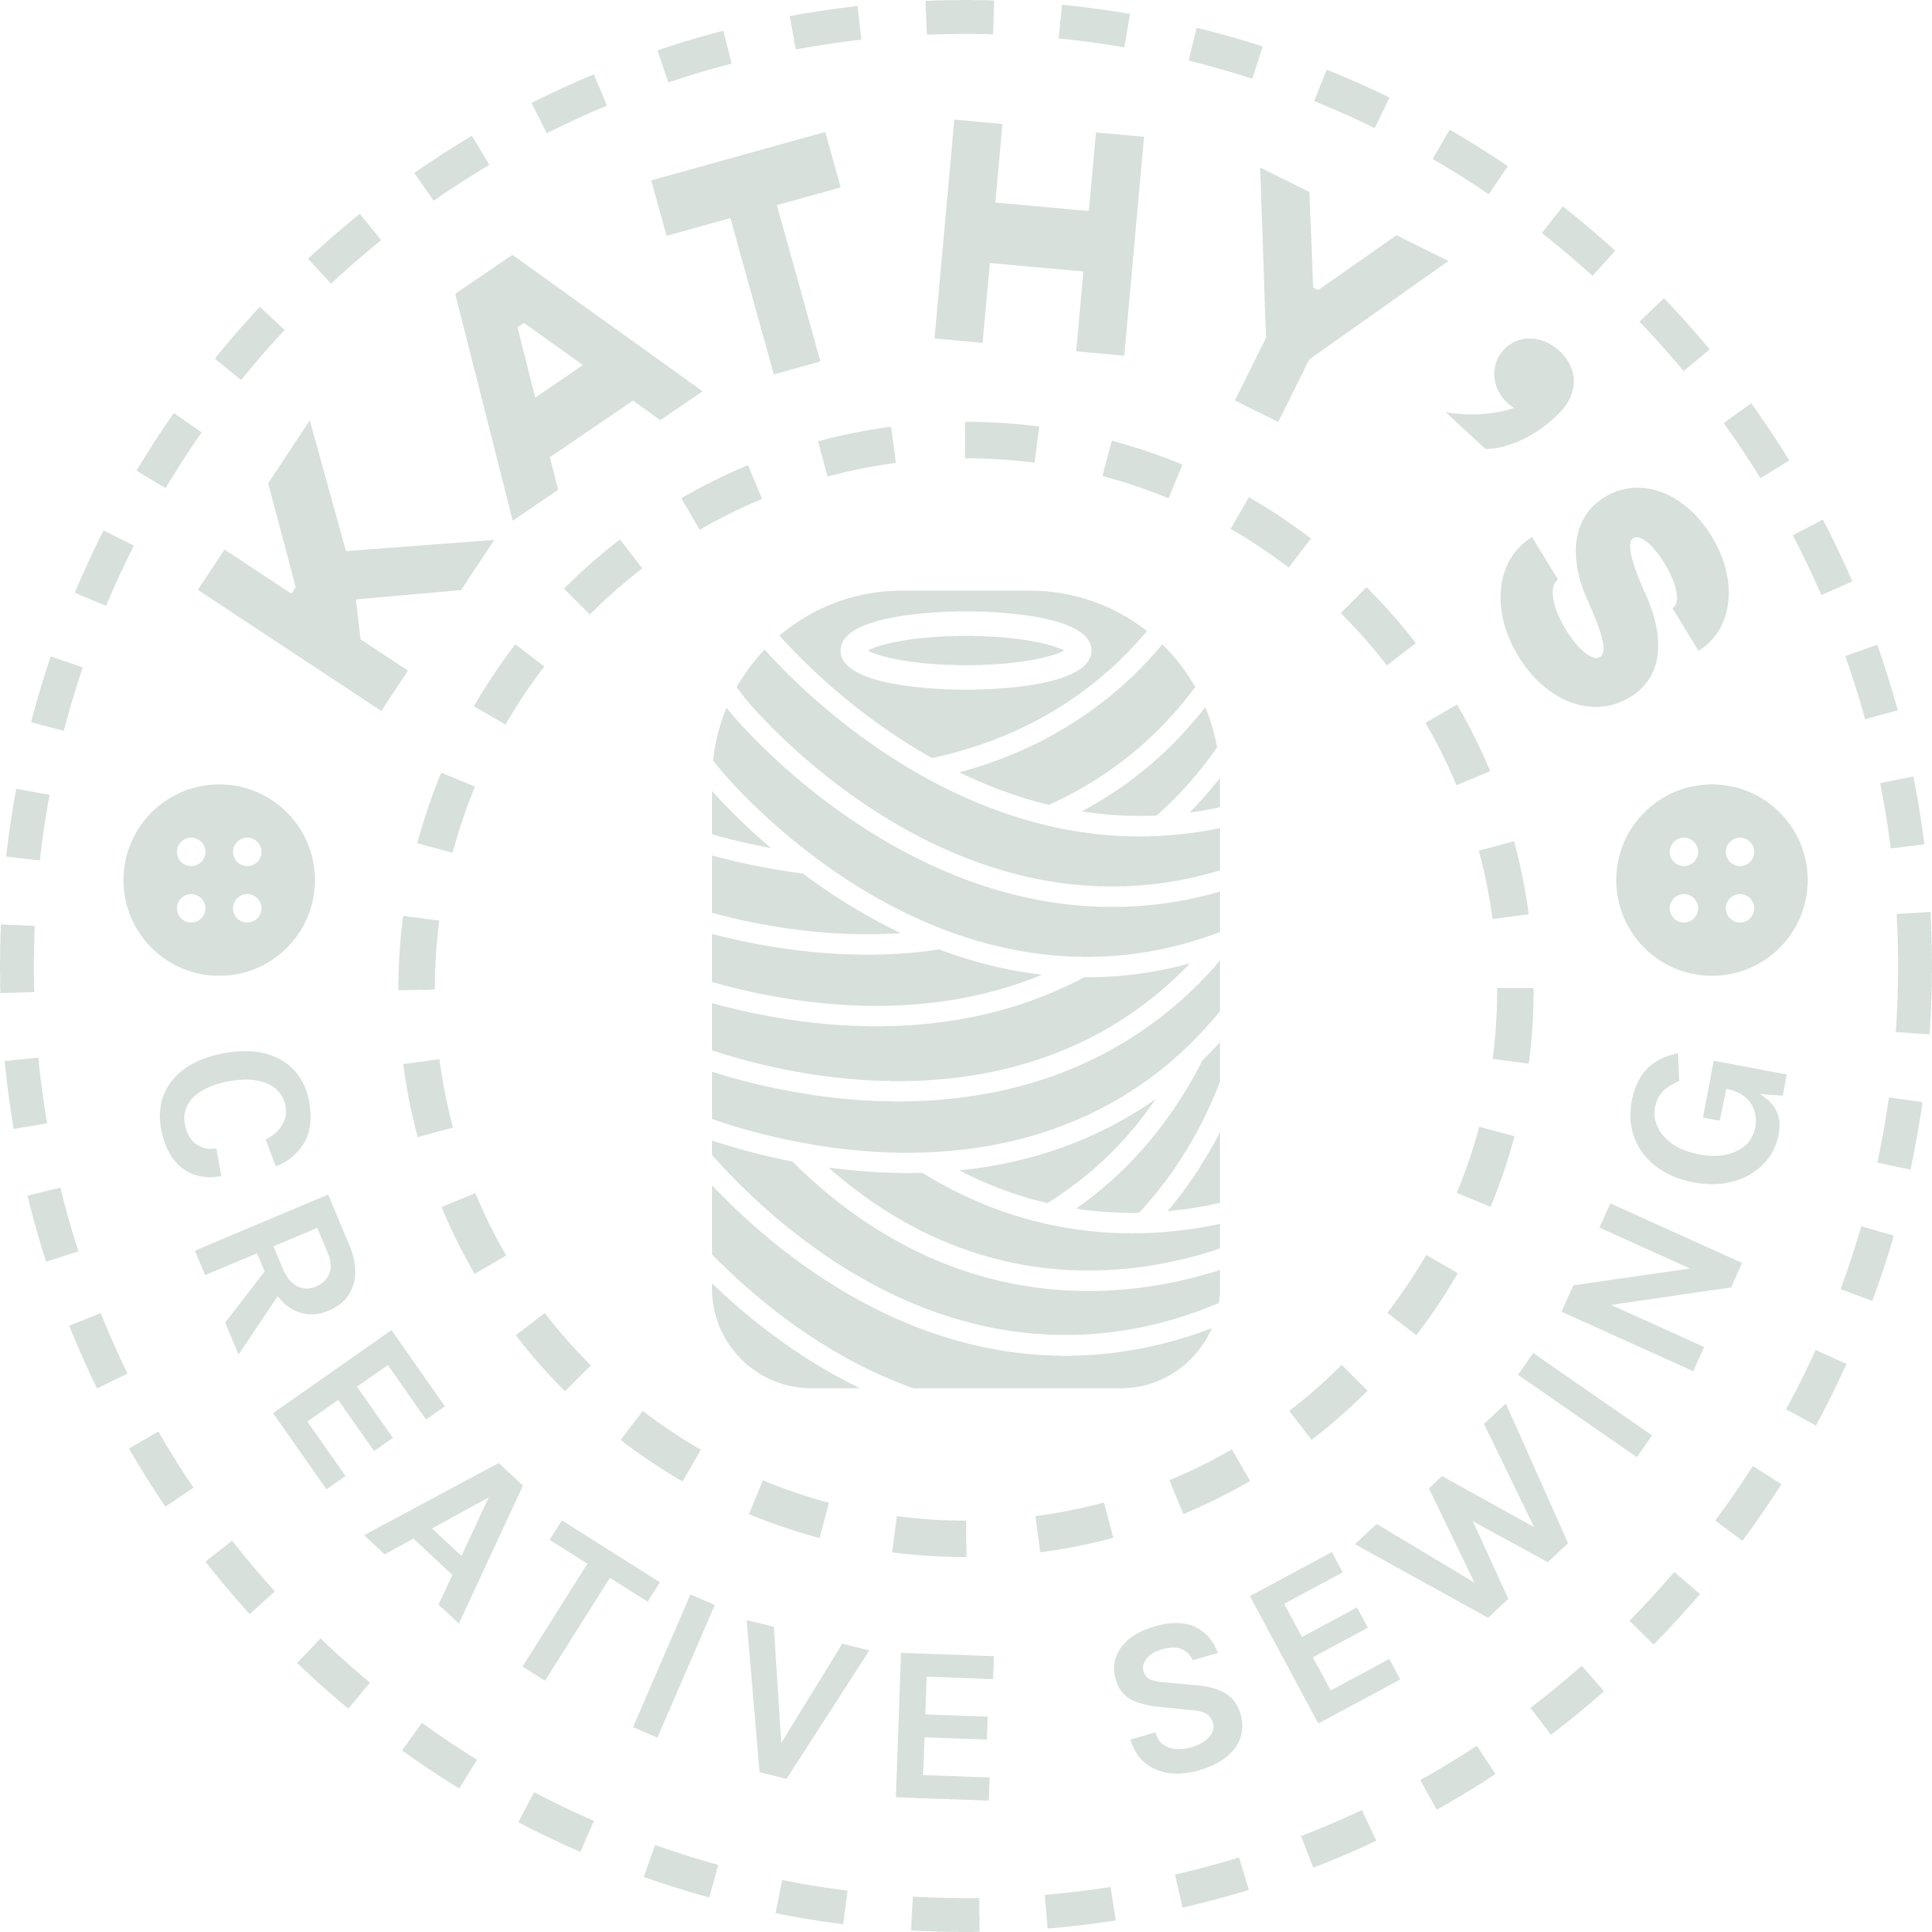 Kathy's Creative Sewing logo